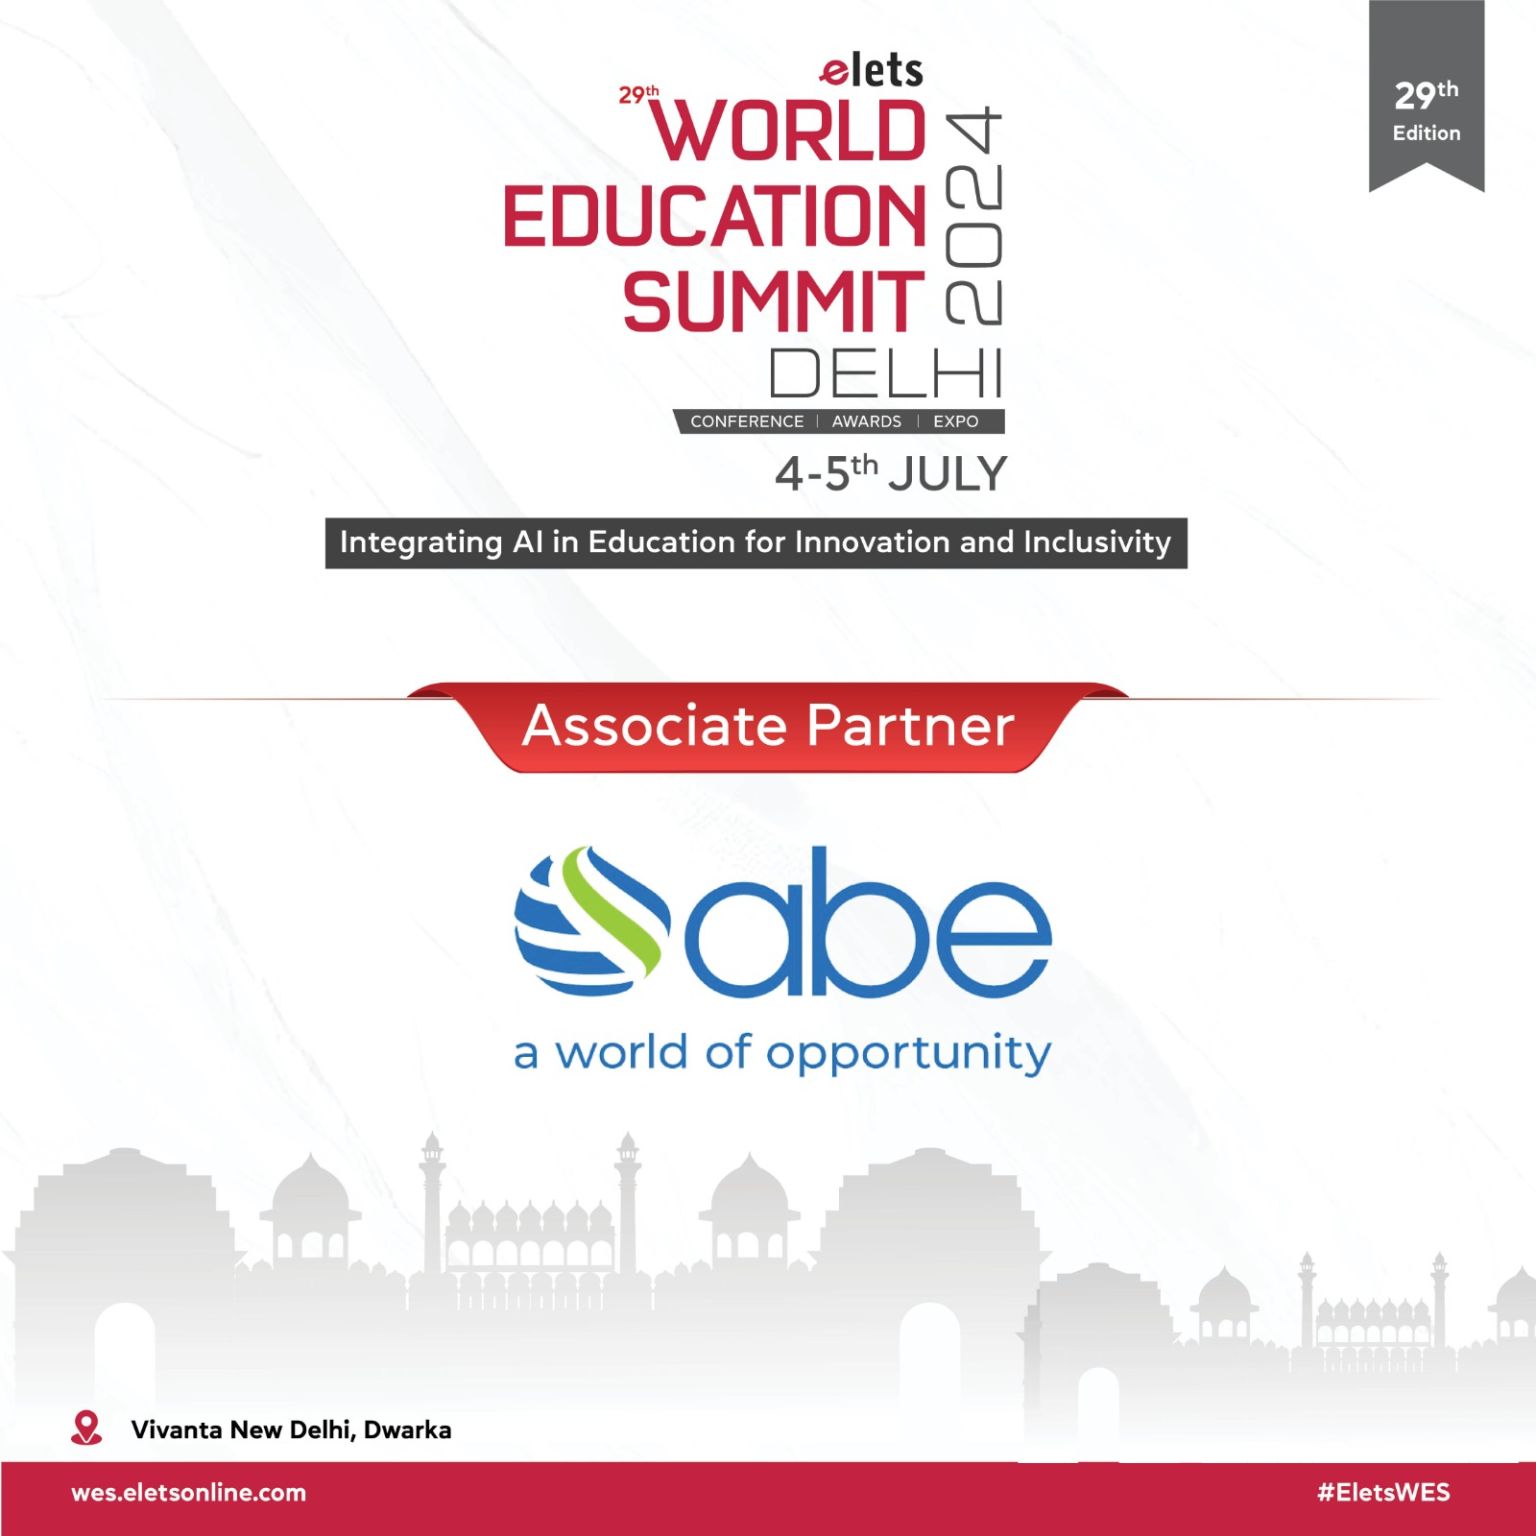 Elets World Education Summit 